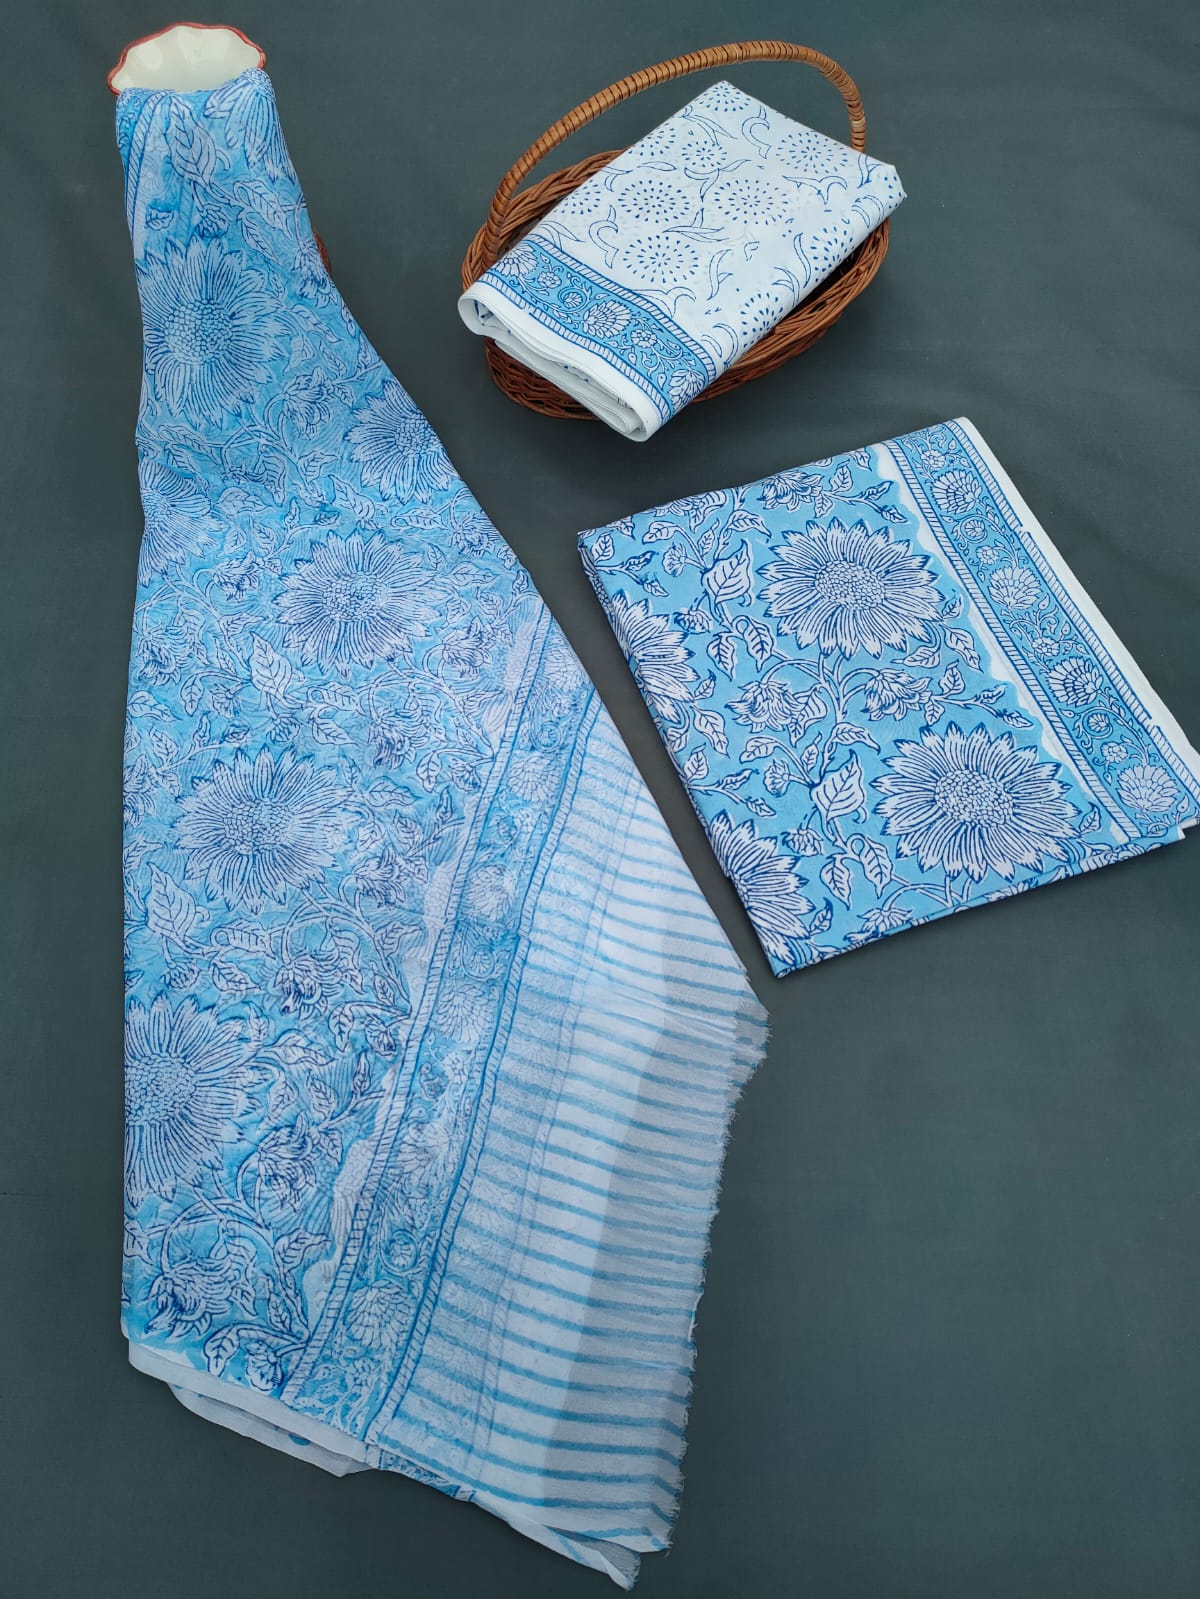 Jaipuri Unstitched Dress Material Hand Block Printed Cotton Suit With Chiffon Dupatta - JB645